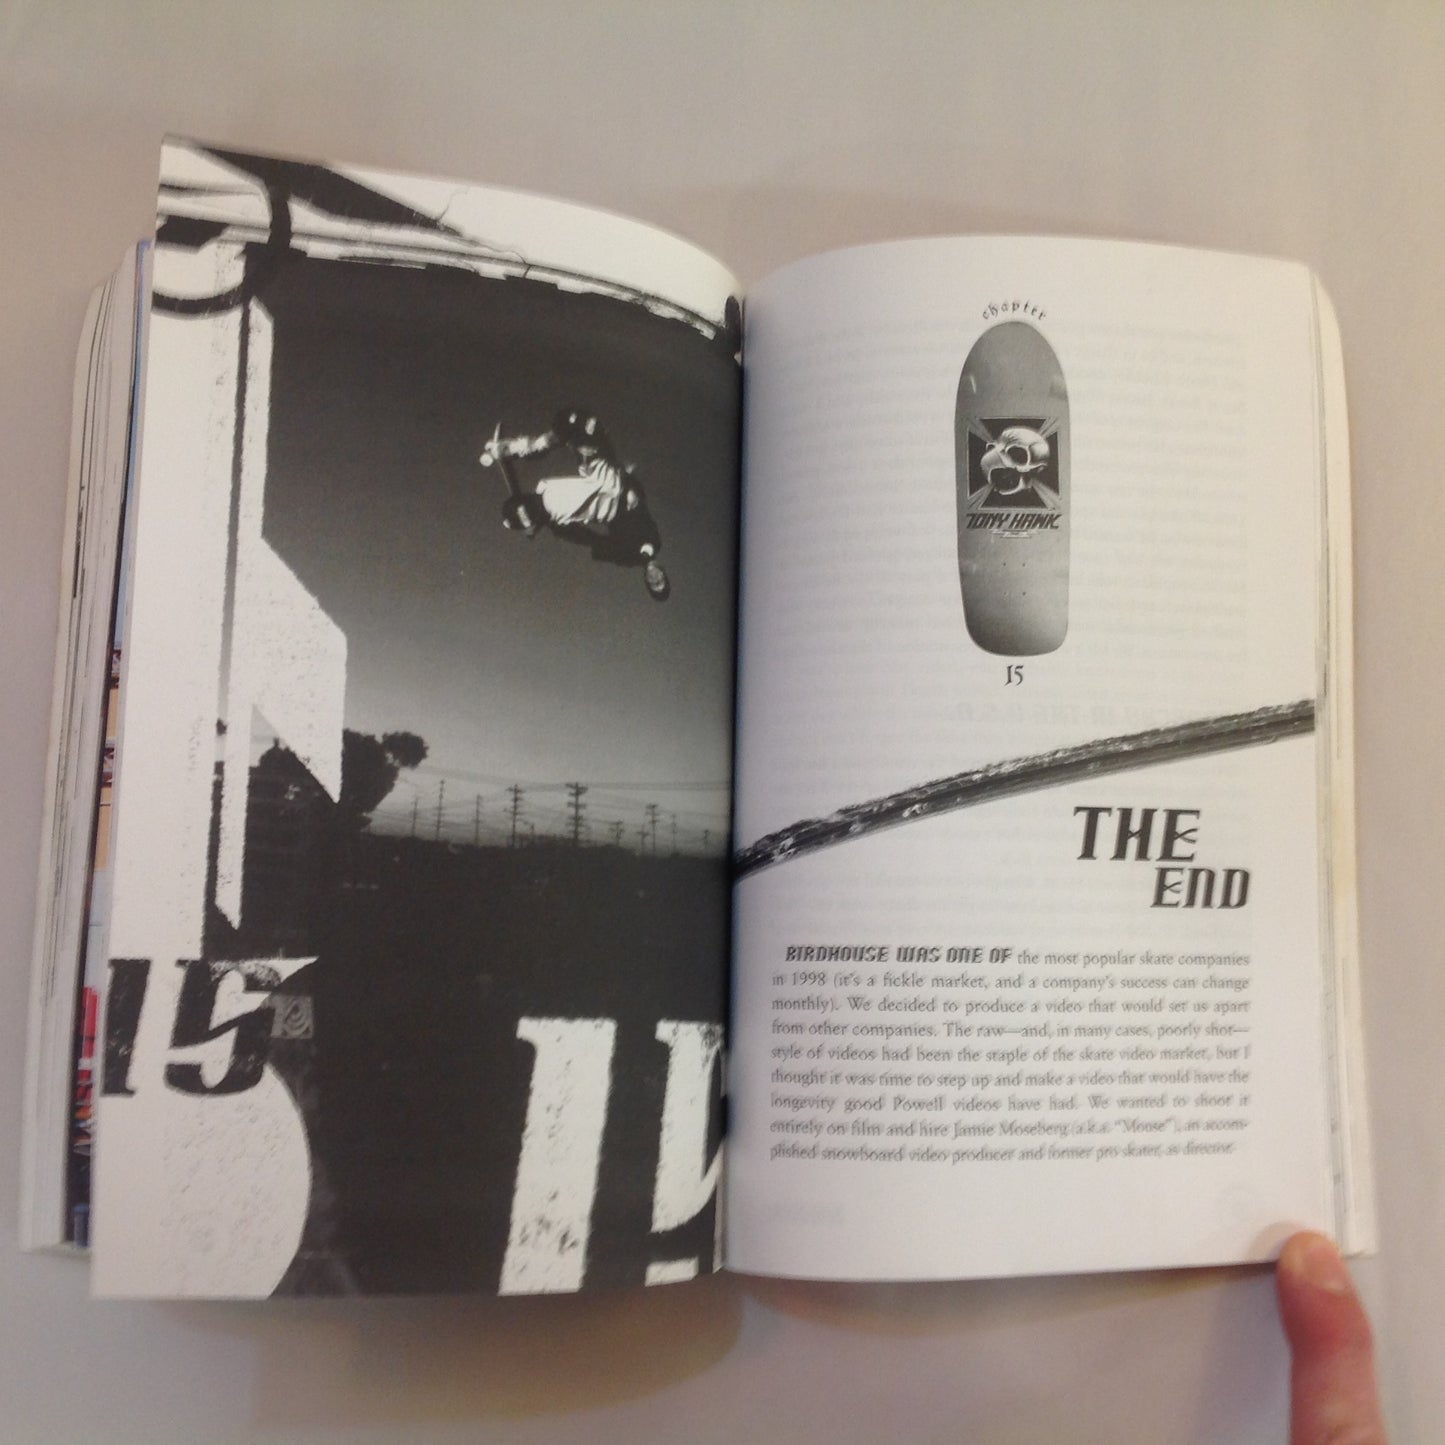 2007 Trade Paperback HAWK Occupation: Skateboarder Tony Hawk with Sean Mortimer